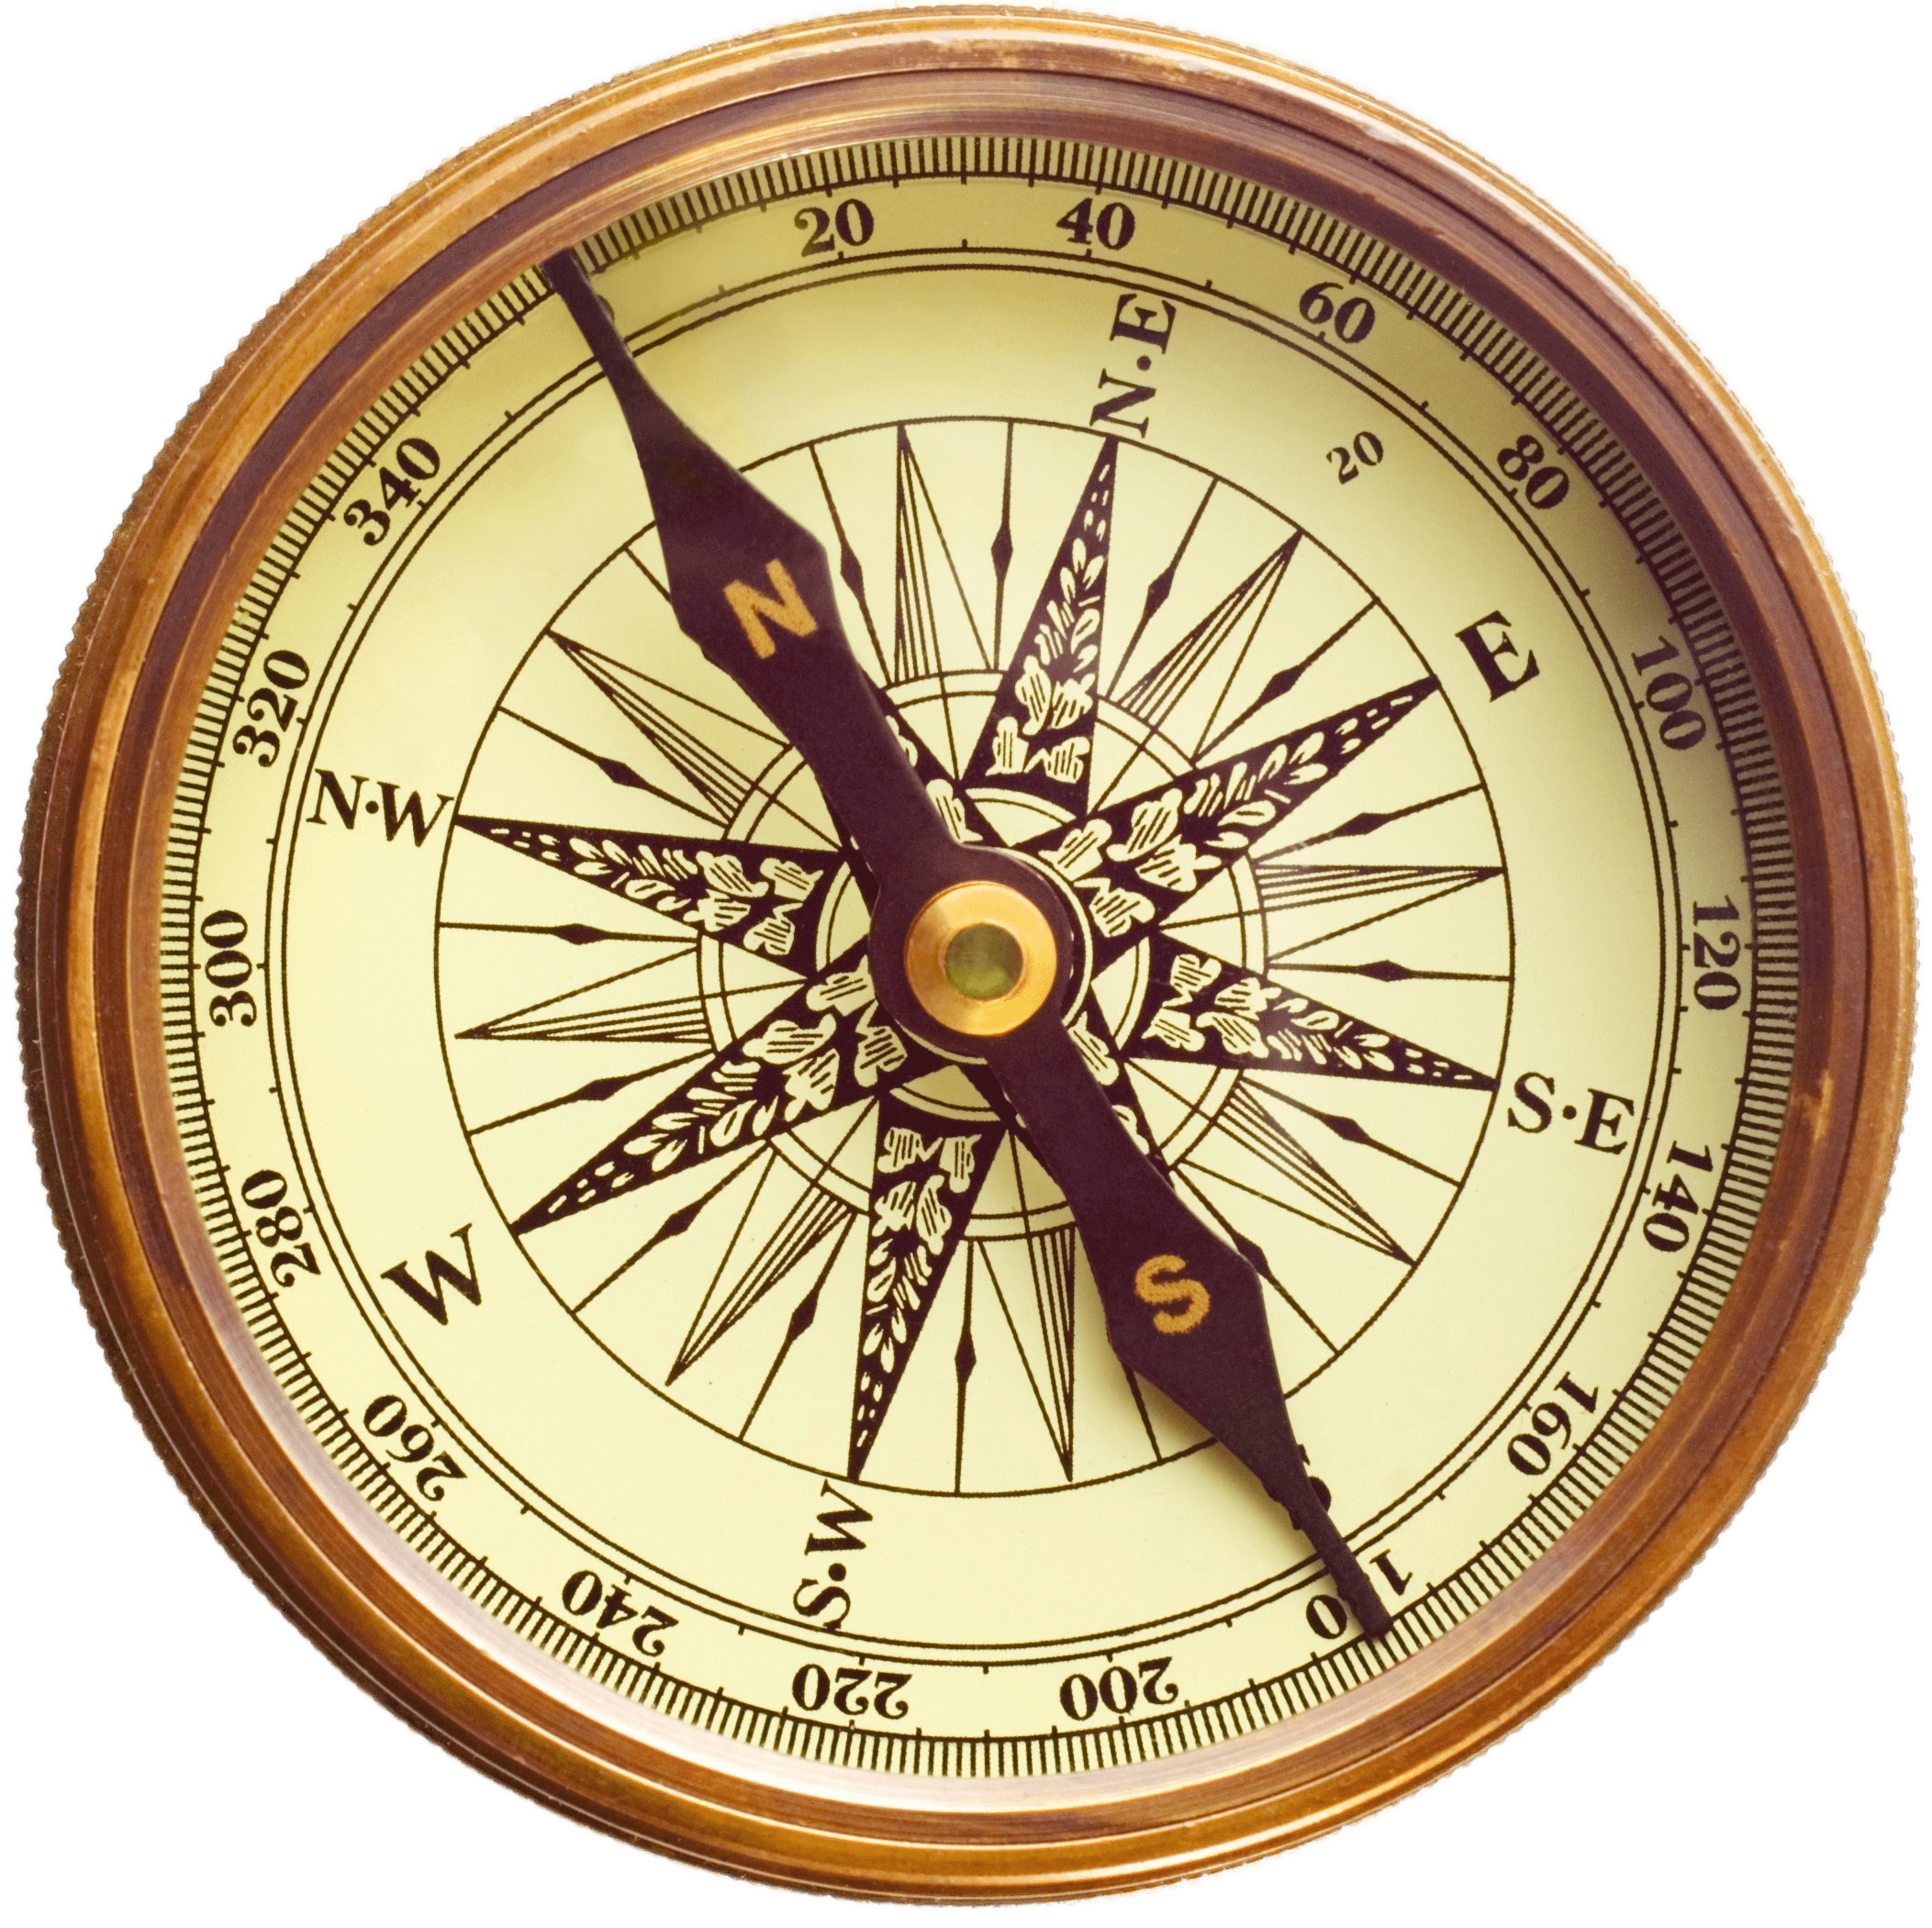 Beta compas. Компас Флавио Джойя. Древний компас компас Флавио Джойя. Компас Эйнштейна-Аншютца.